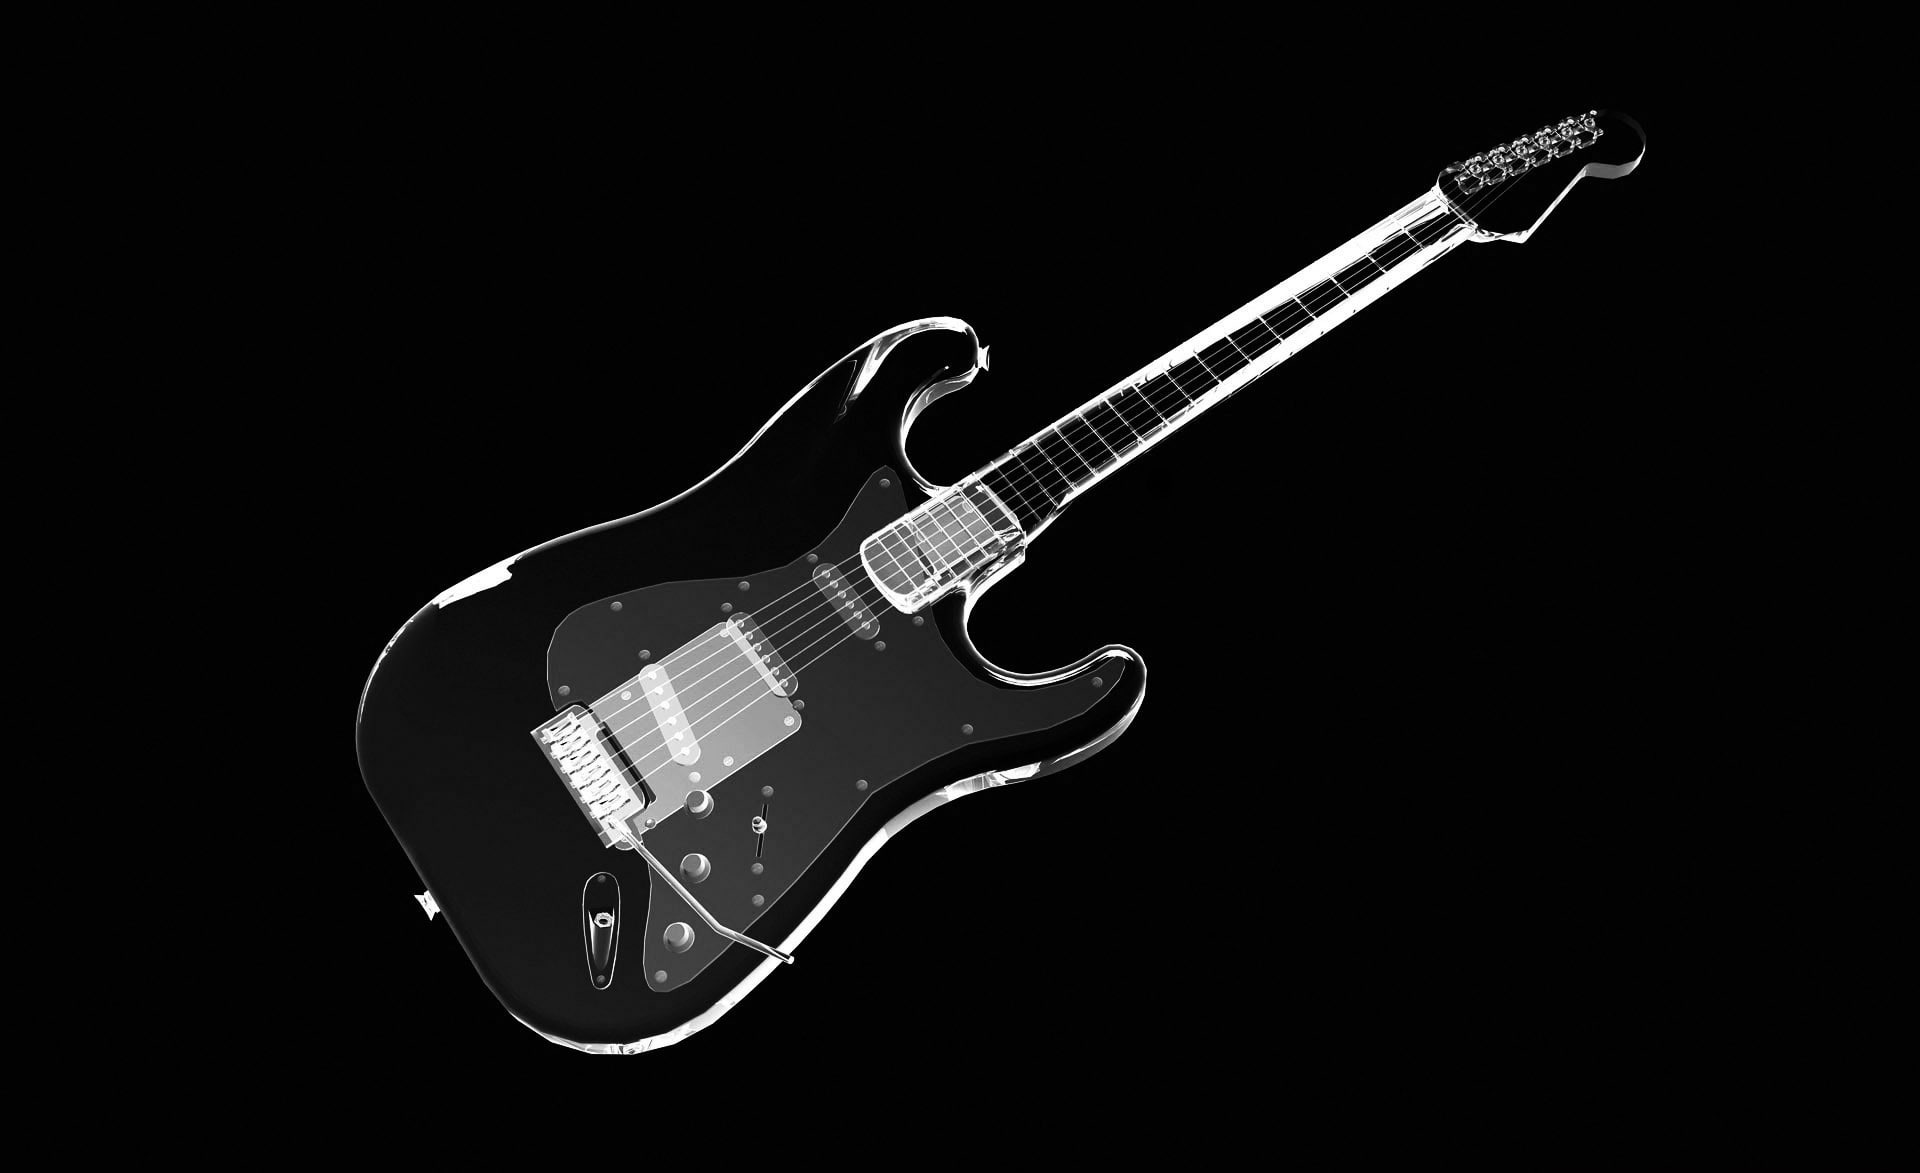 3d Guitar, black electric guitar illustration, Aero, musical instrument